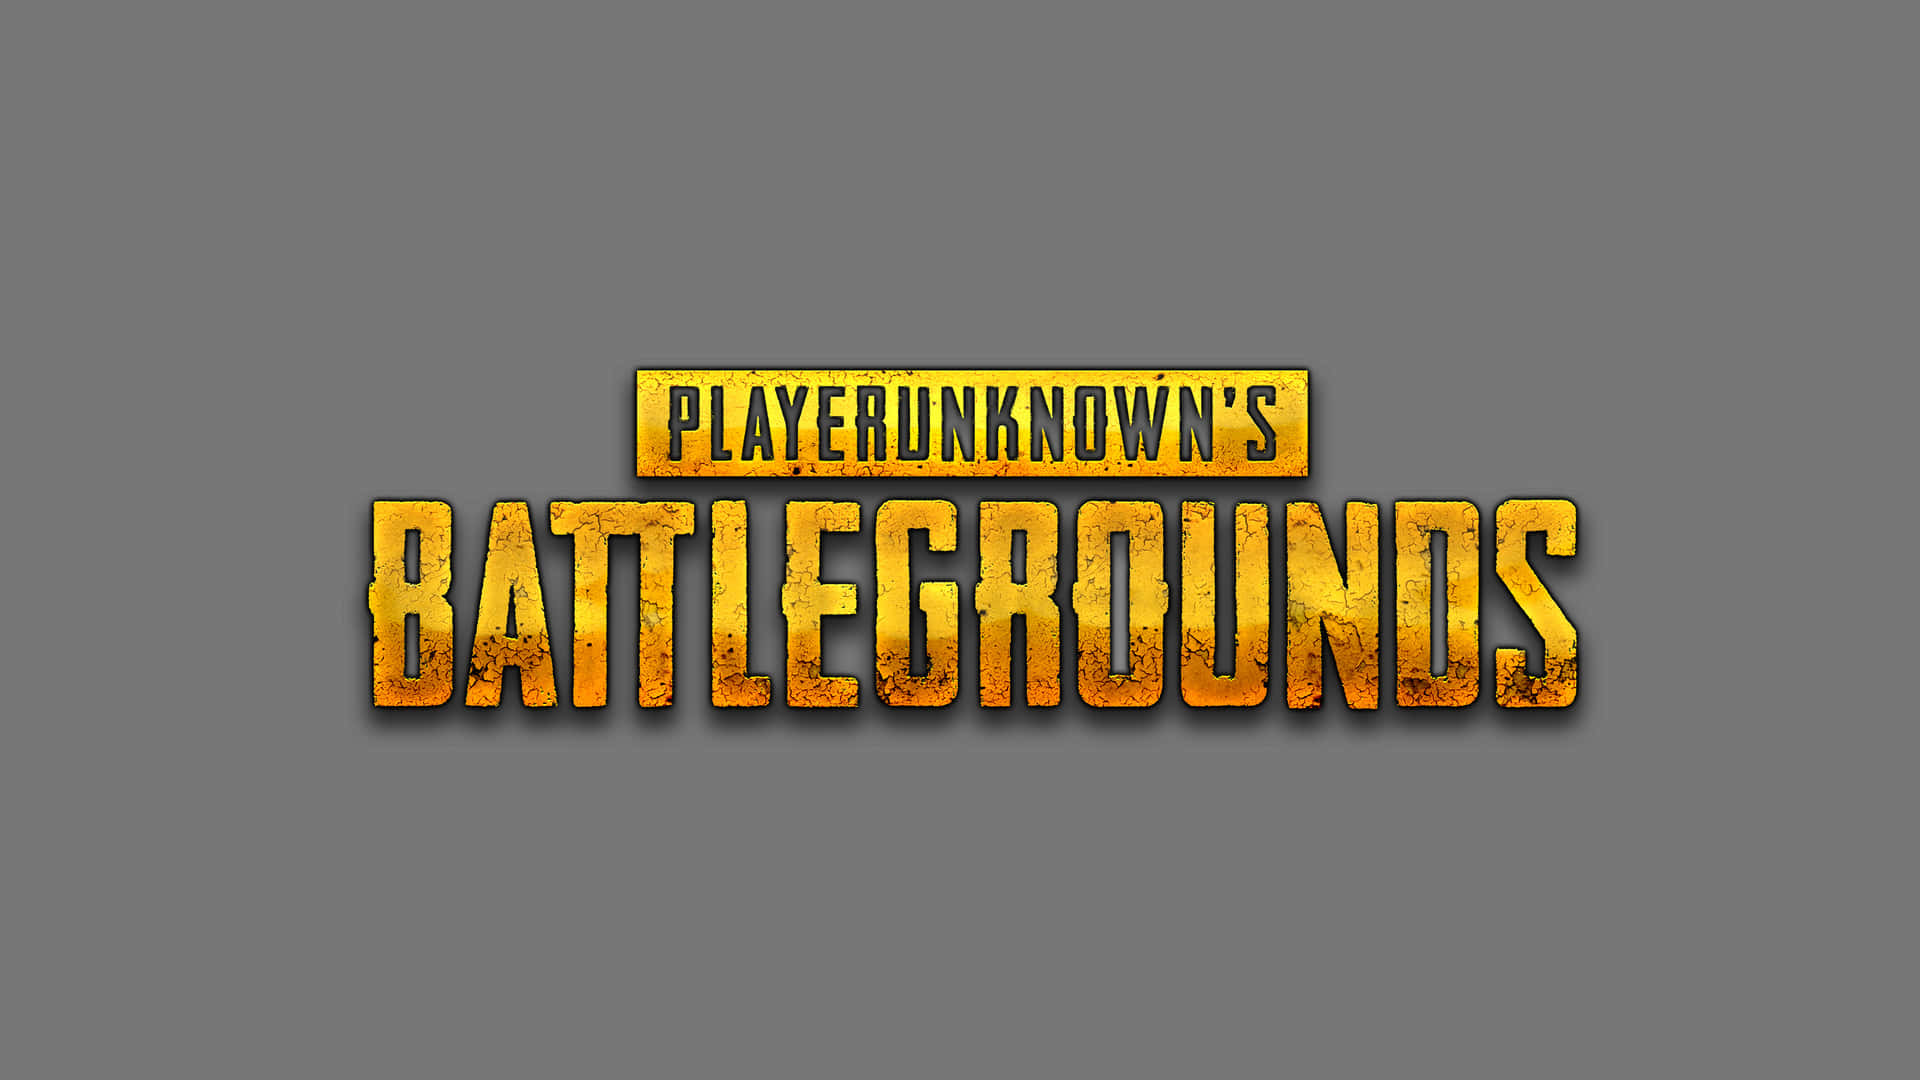 The Logo For Playknowledge Battlefields Wallpaper